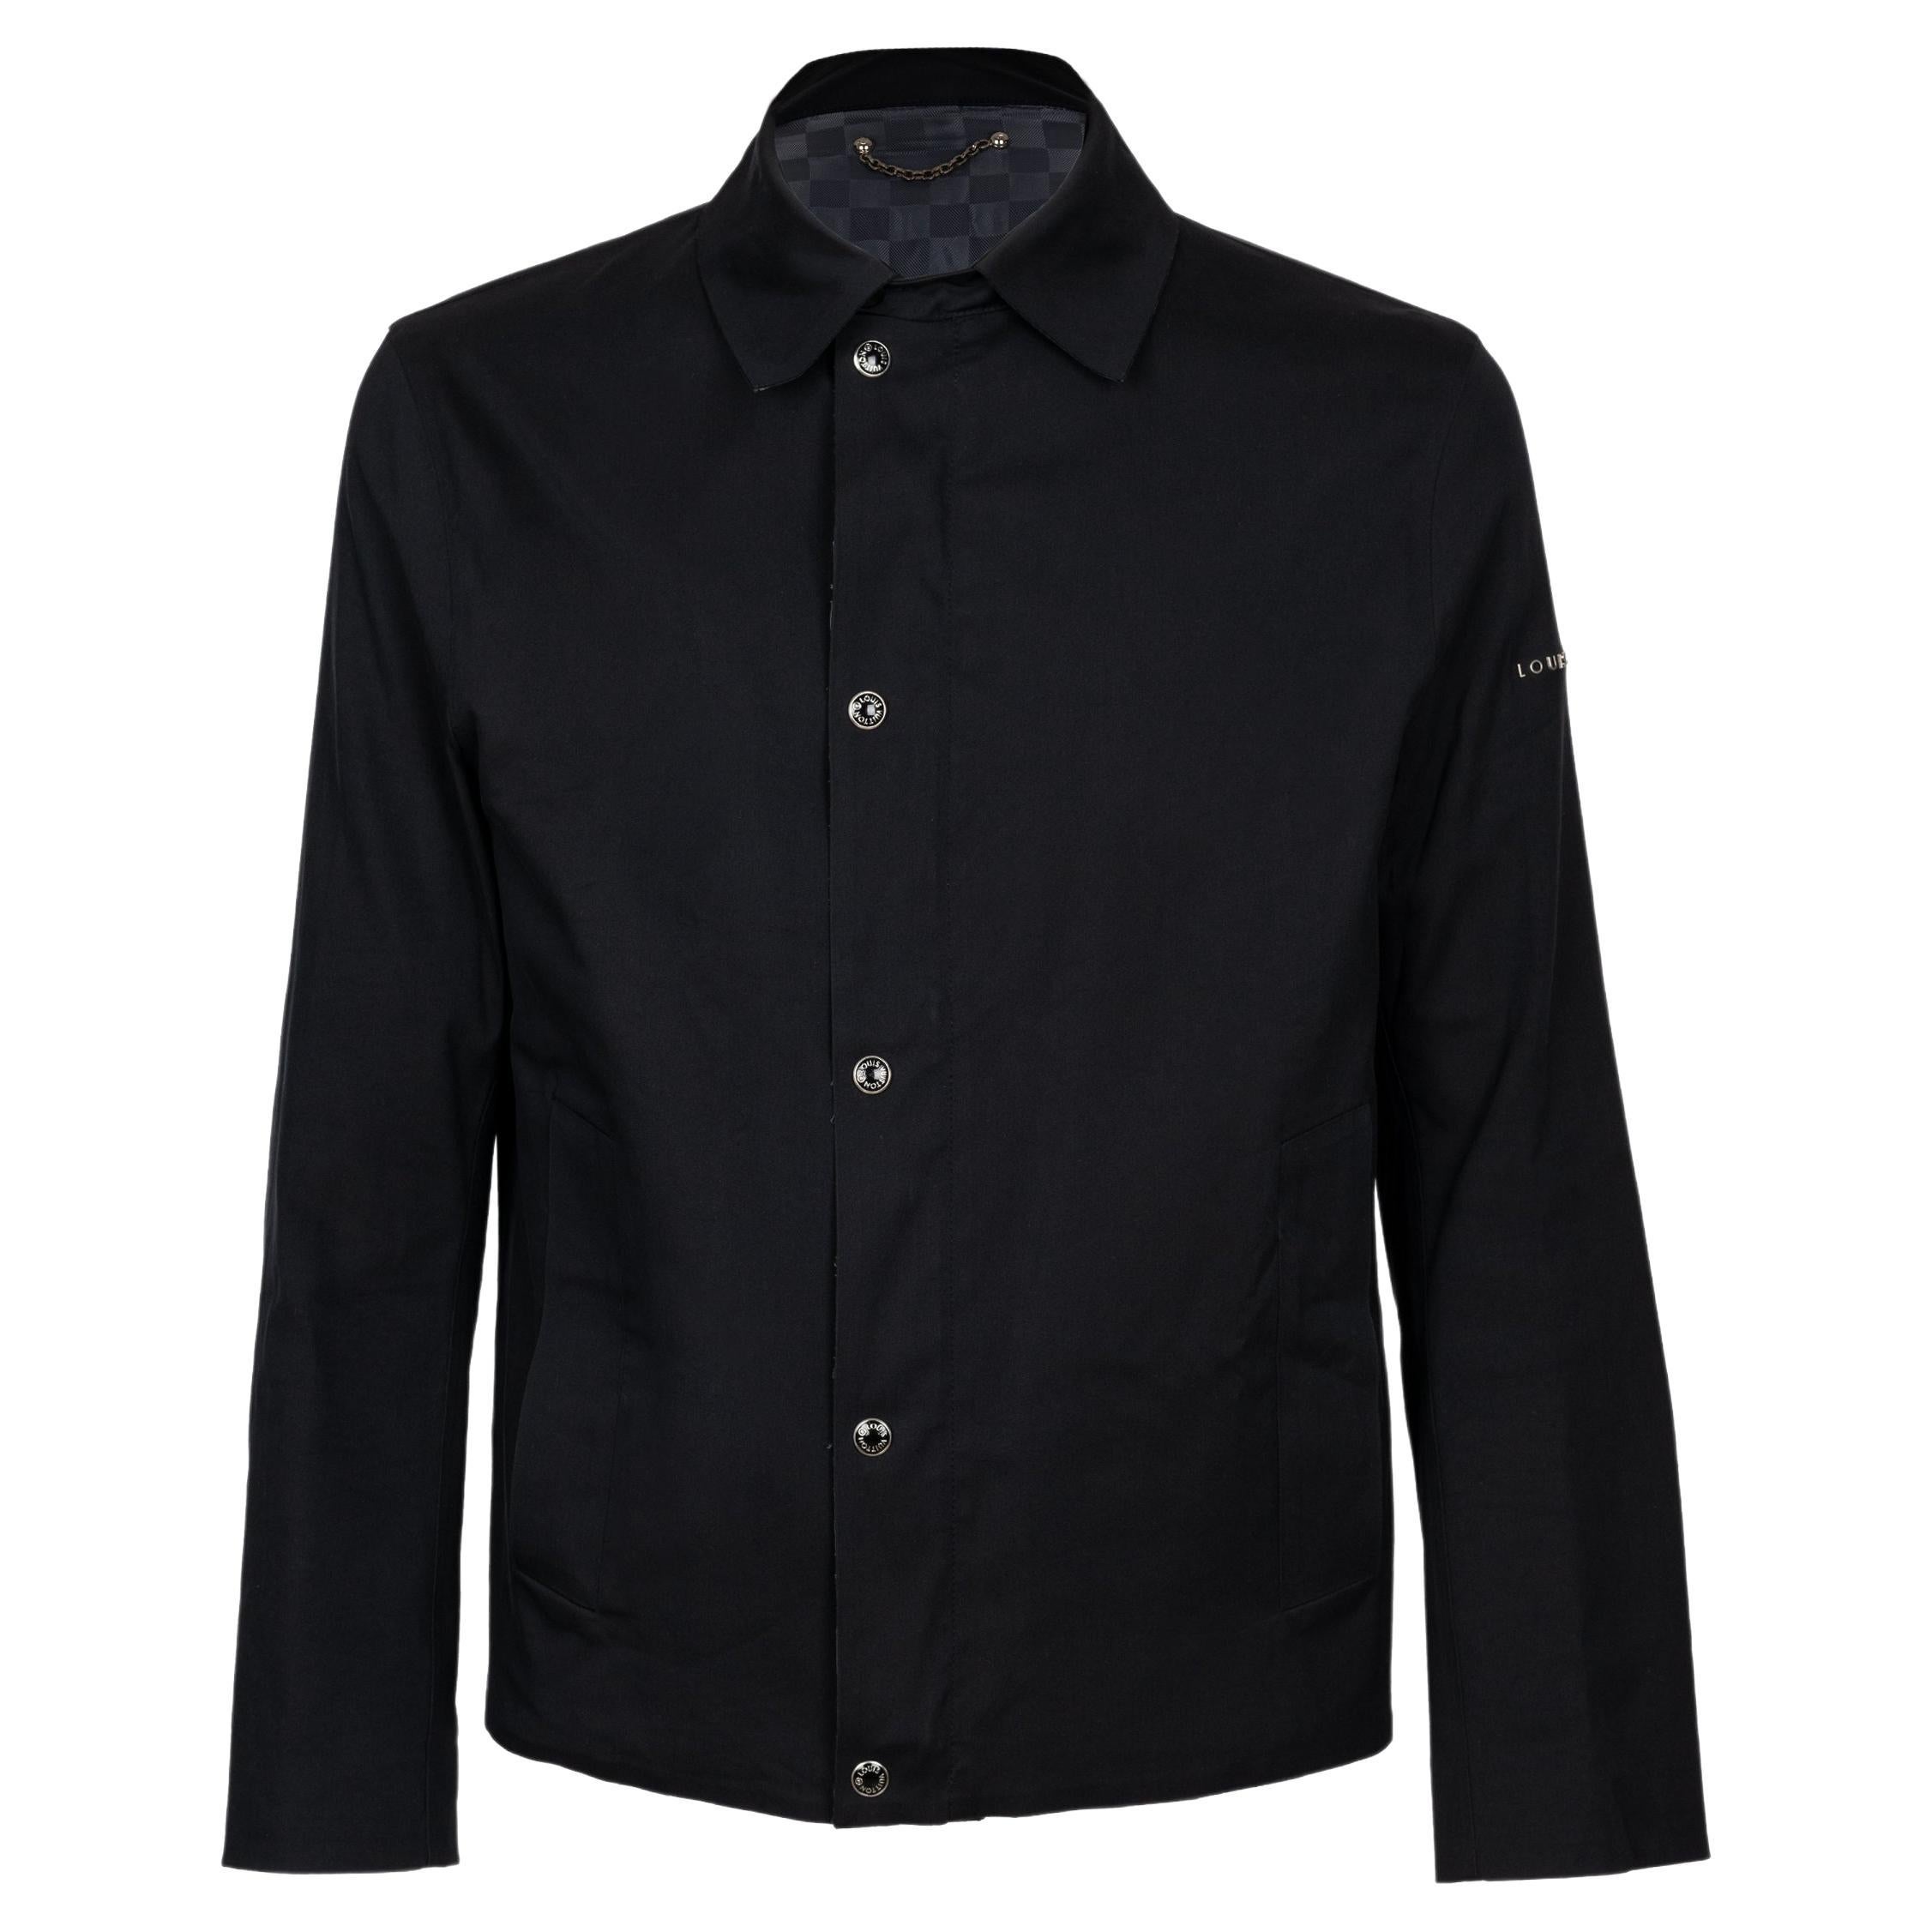 Louis Vuitton Damier Shirt - 4 For Sale on 1stDibs